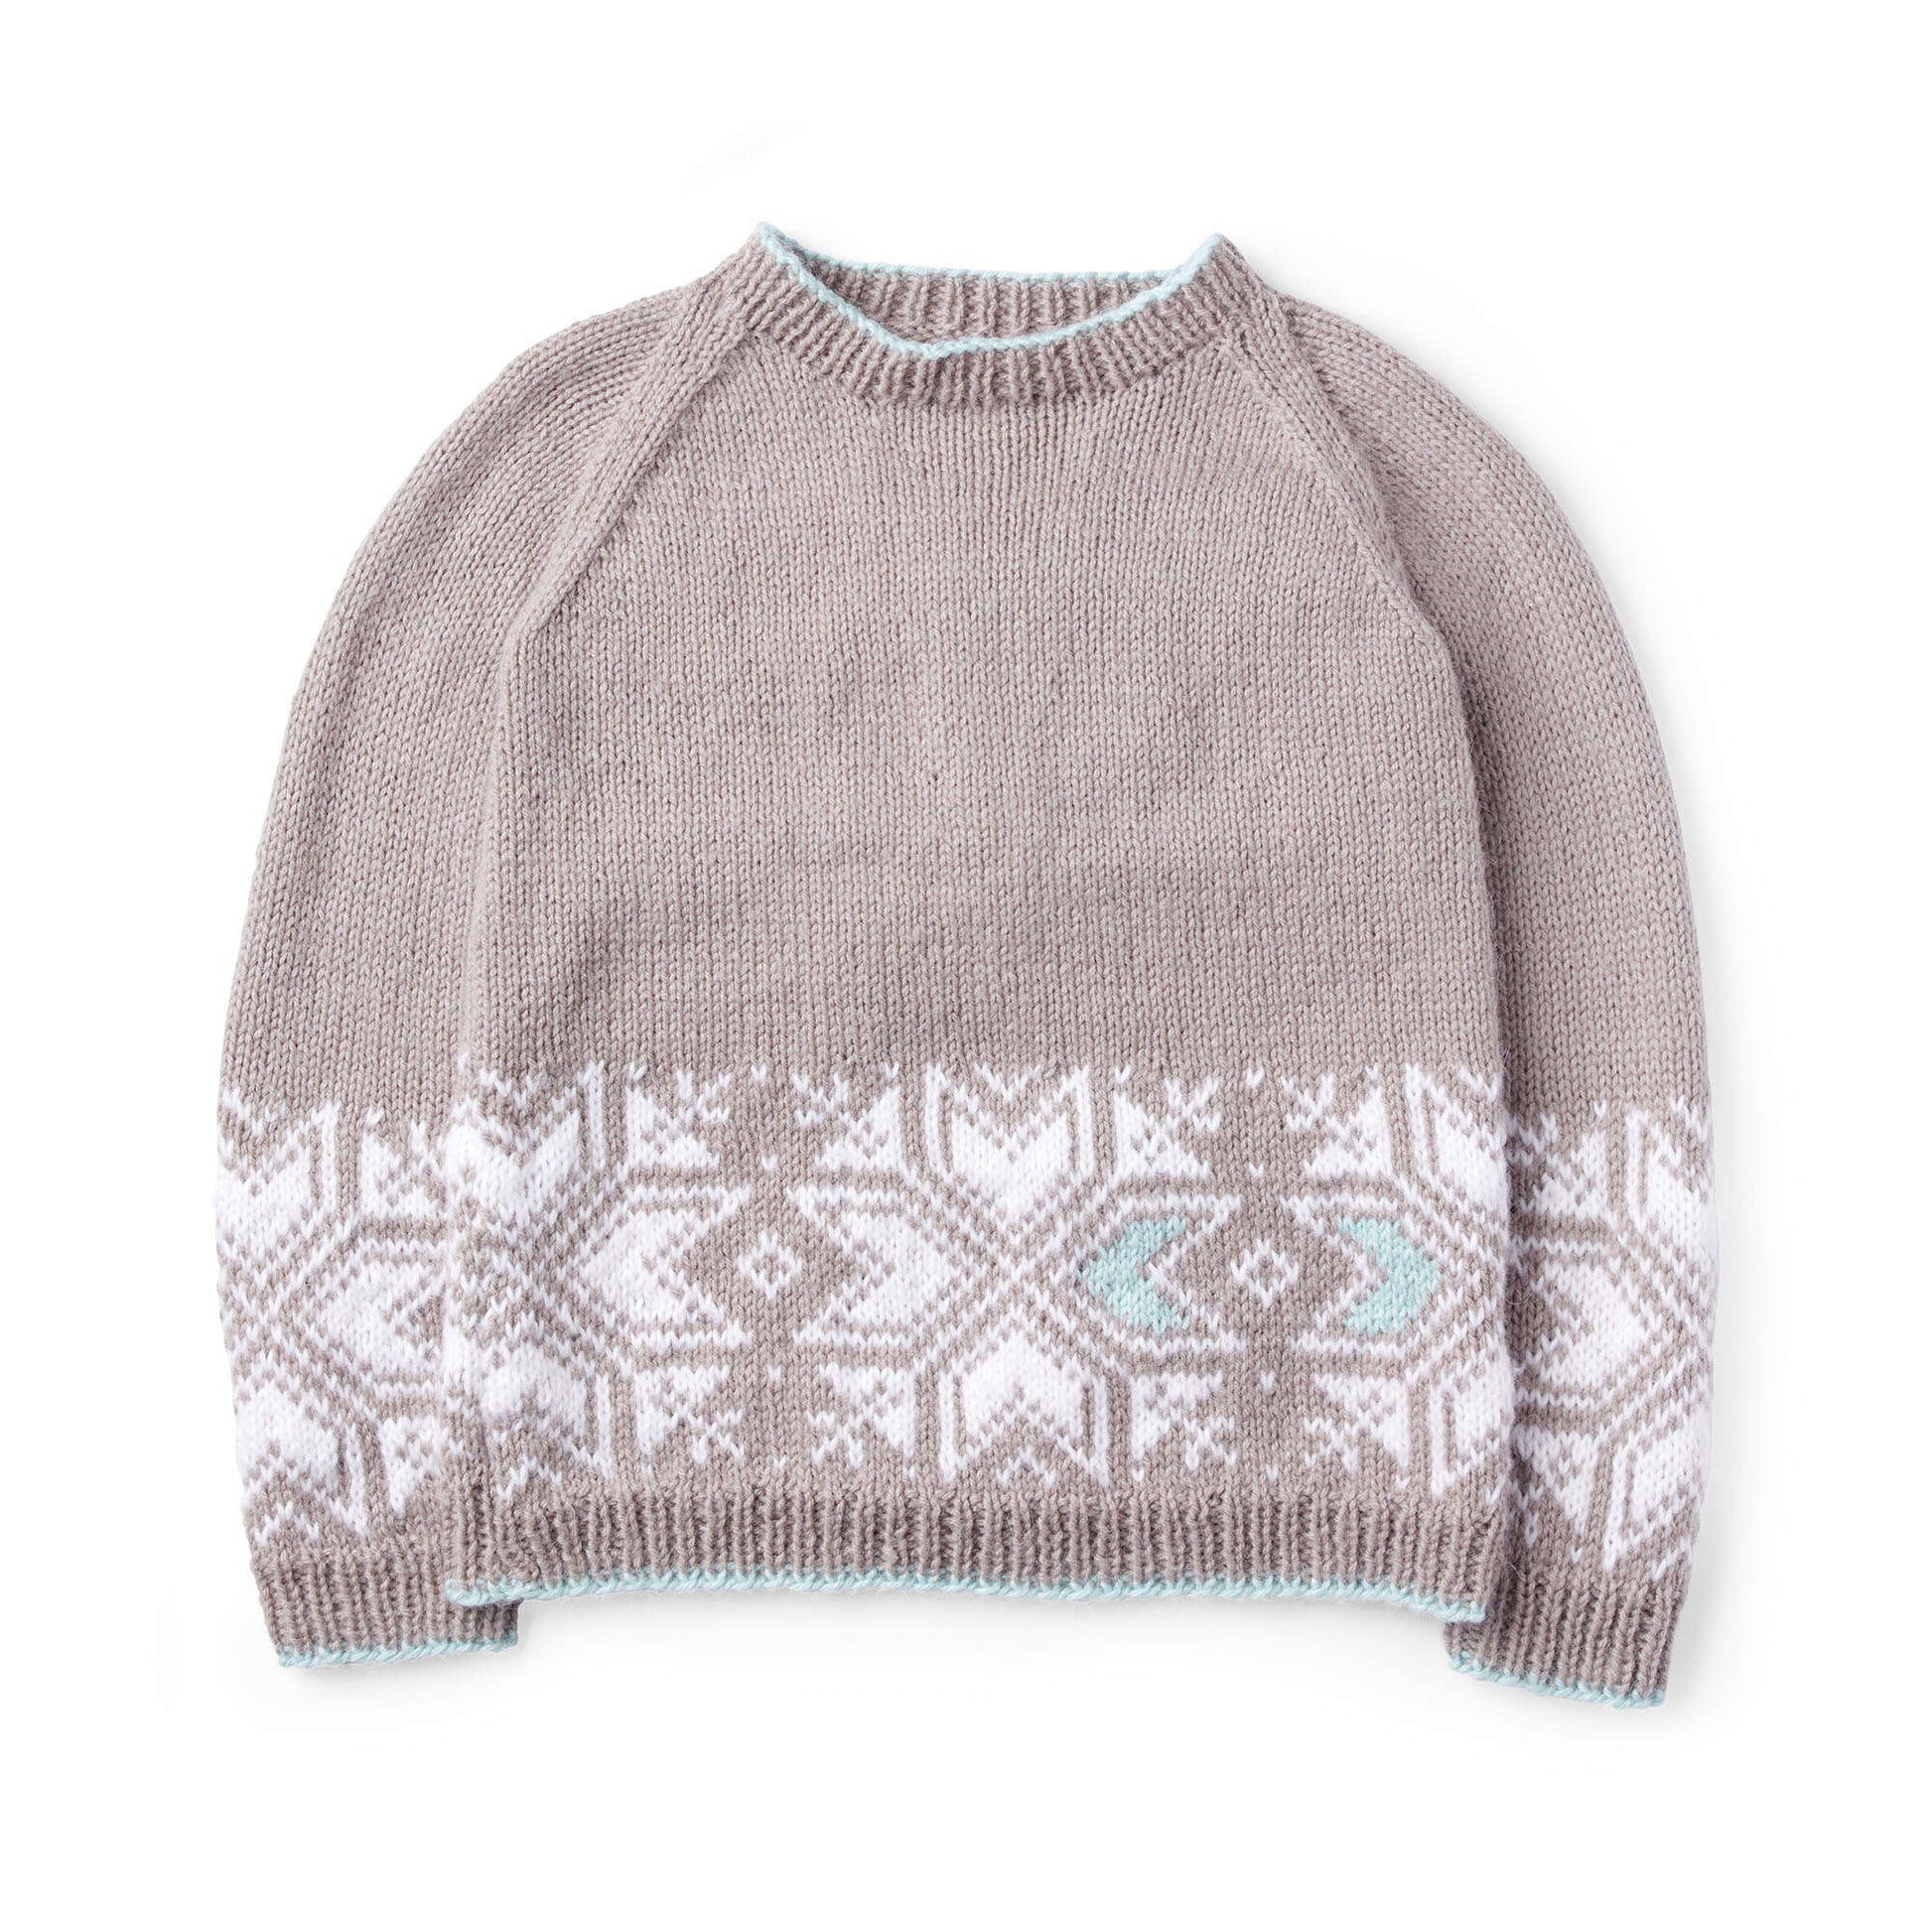 Free Patons Graphic Snowflake Knit Sweater Pattern